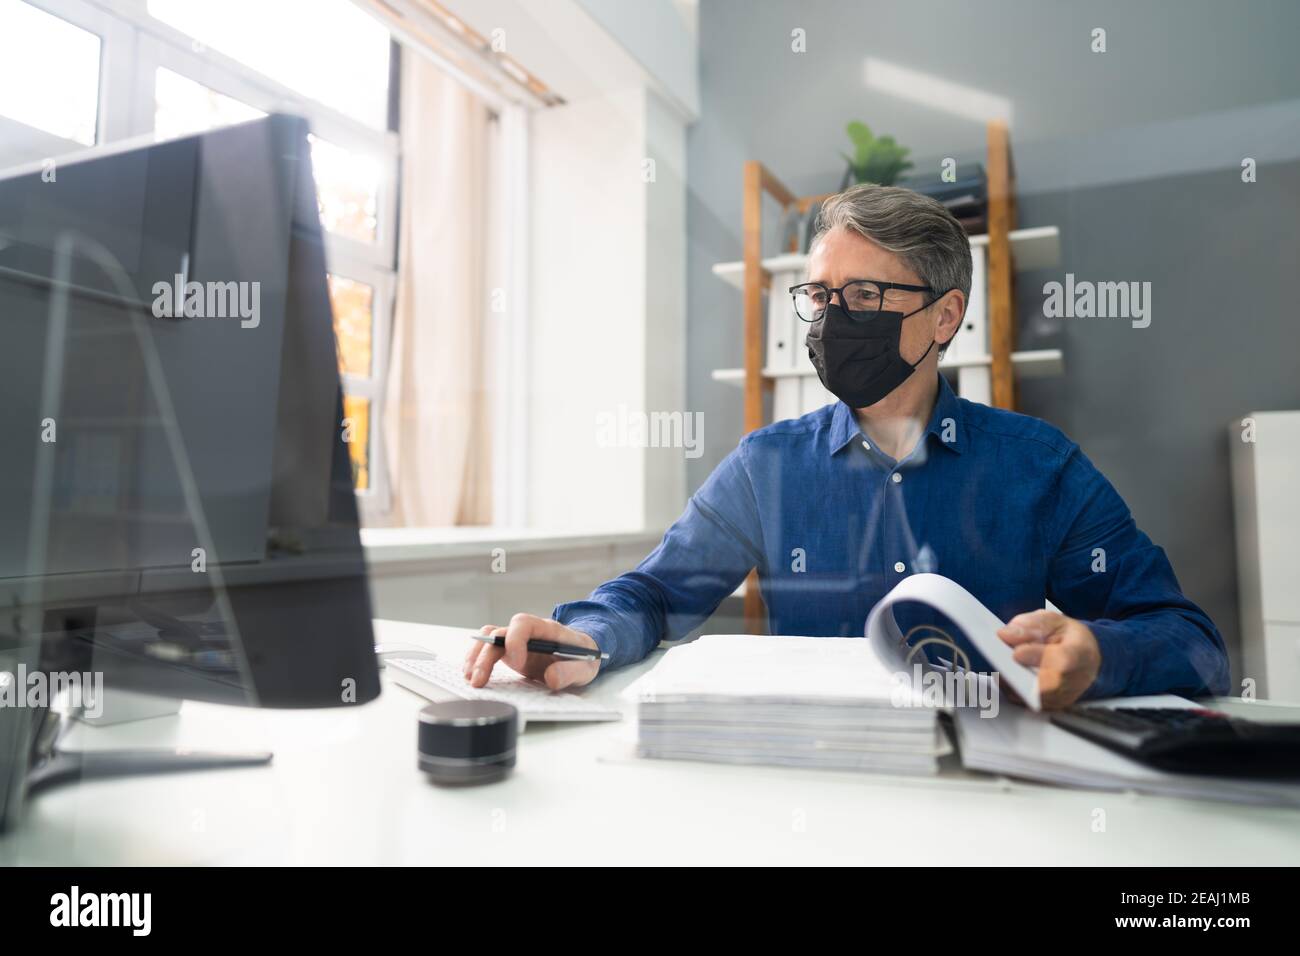 Senior Accountant Man Working With Invoice Stock Photo